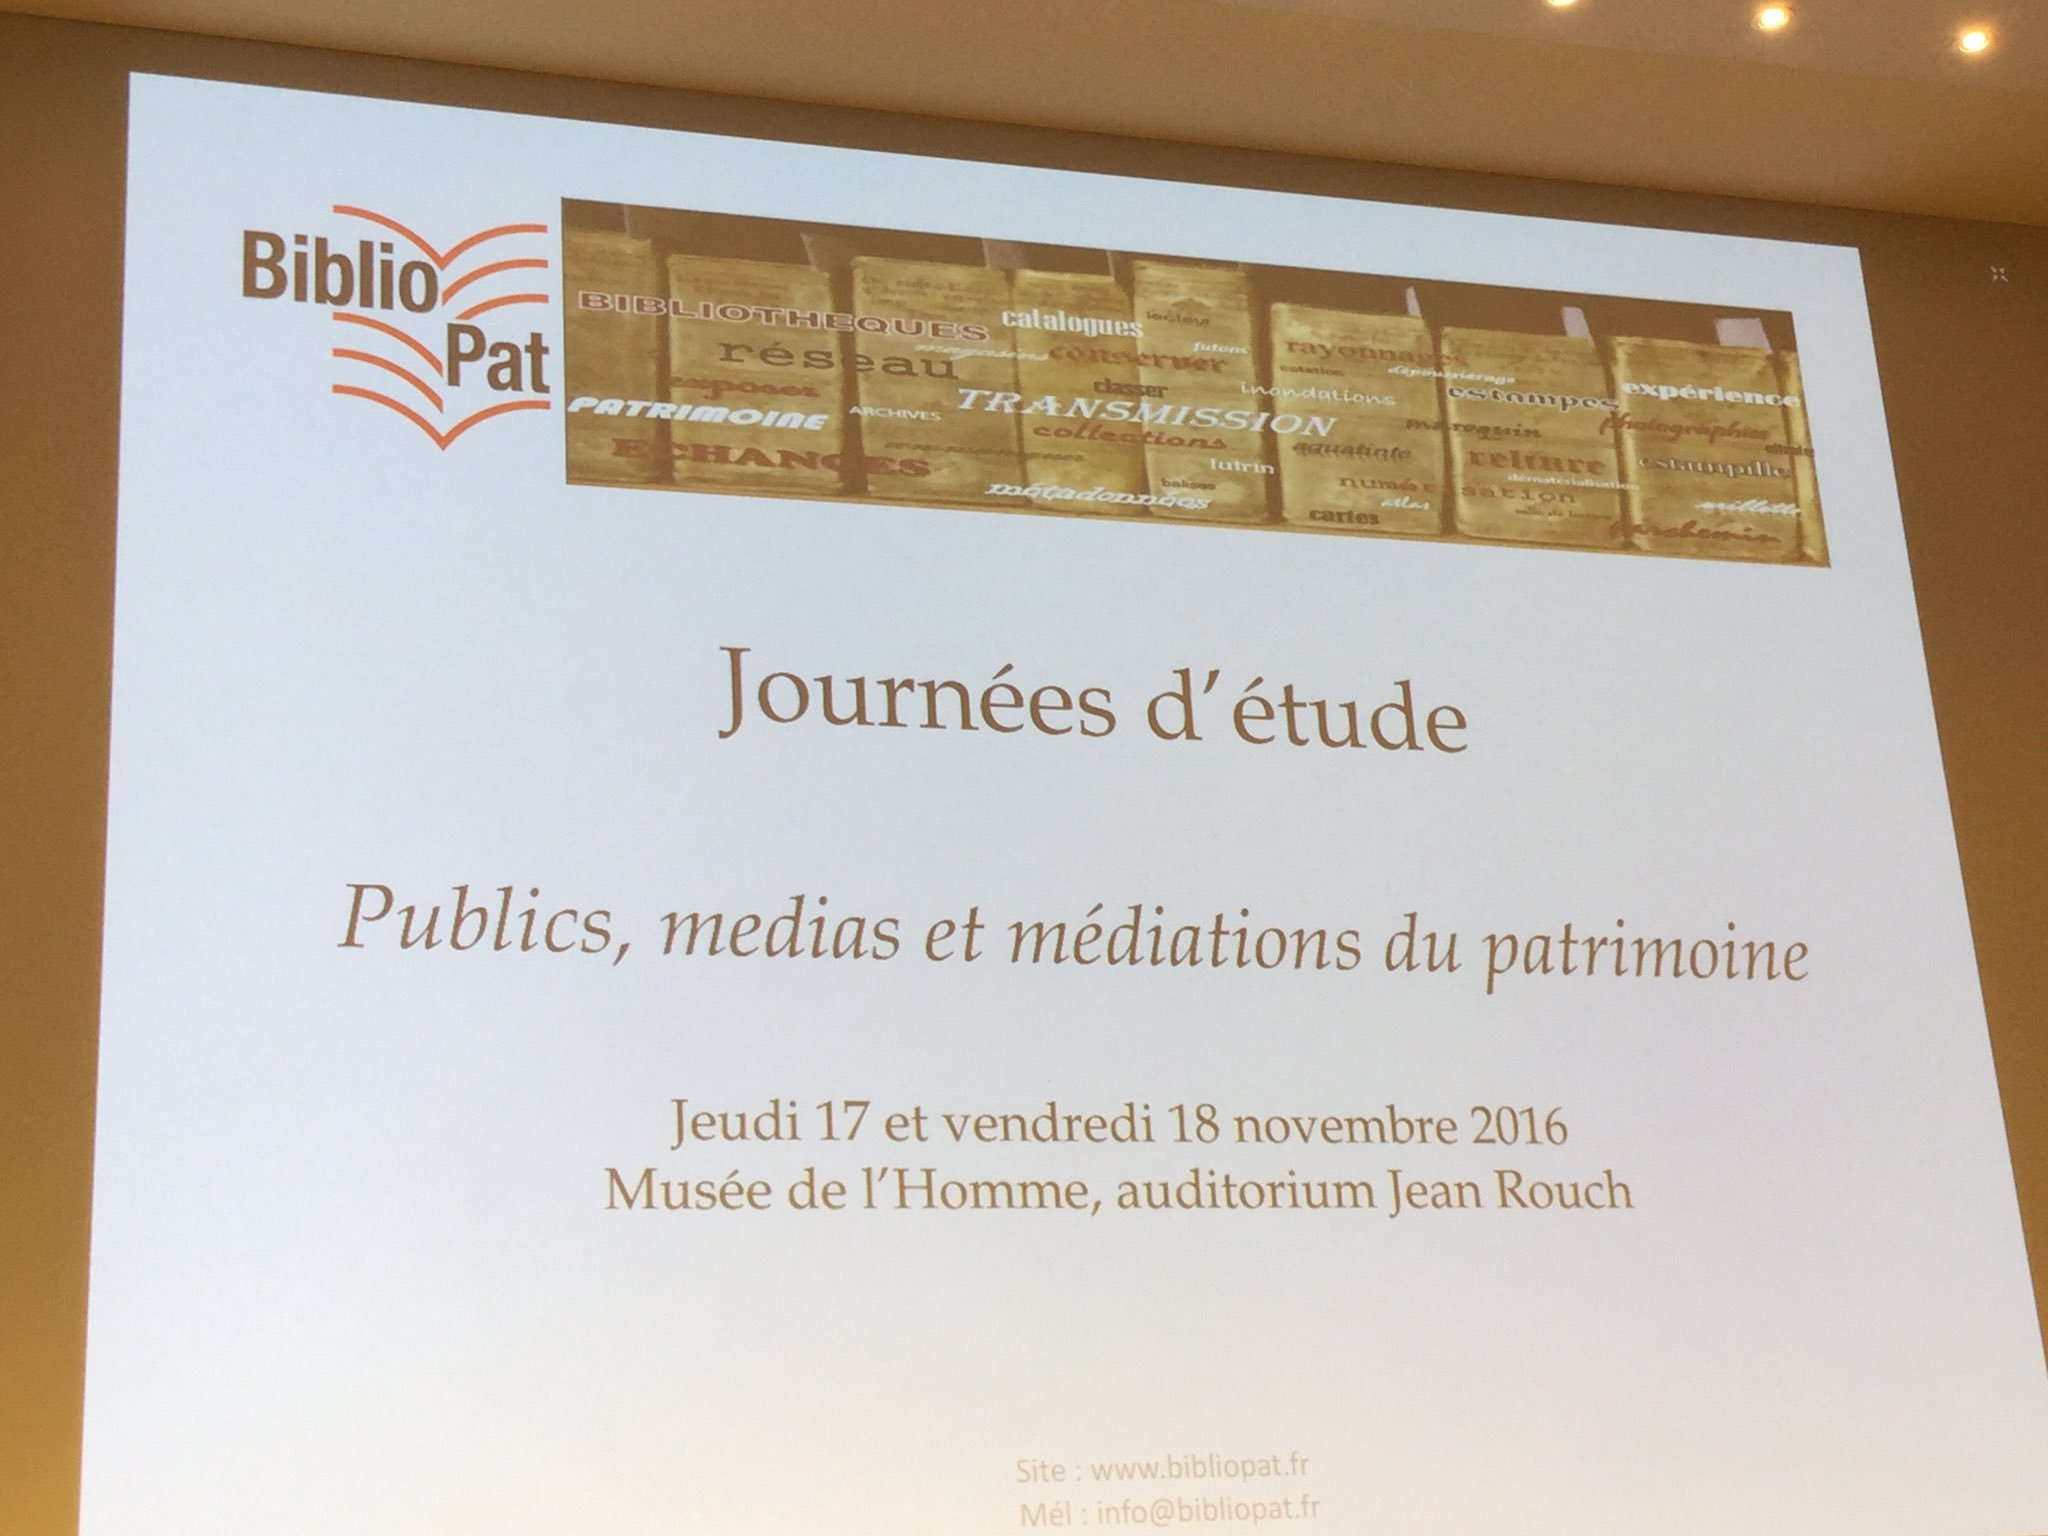 Conférence inaugurale de Marie-Sylvie Poli #BiblioPat16 https://t.co/TDjlxWYsyT